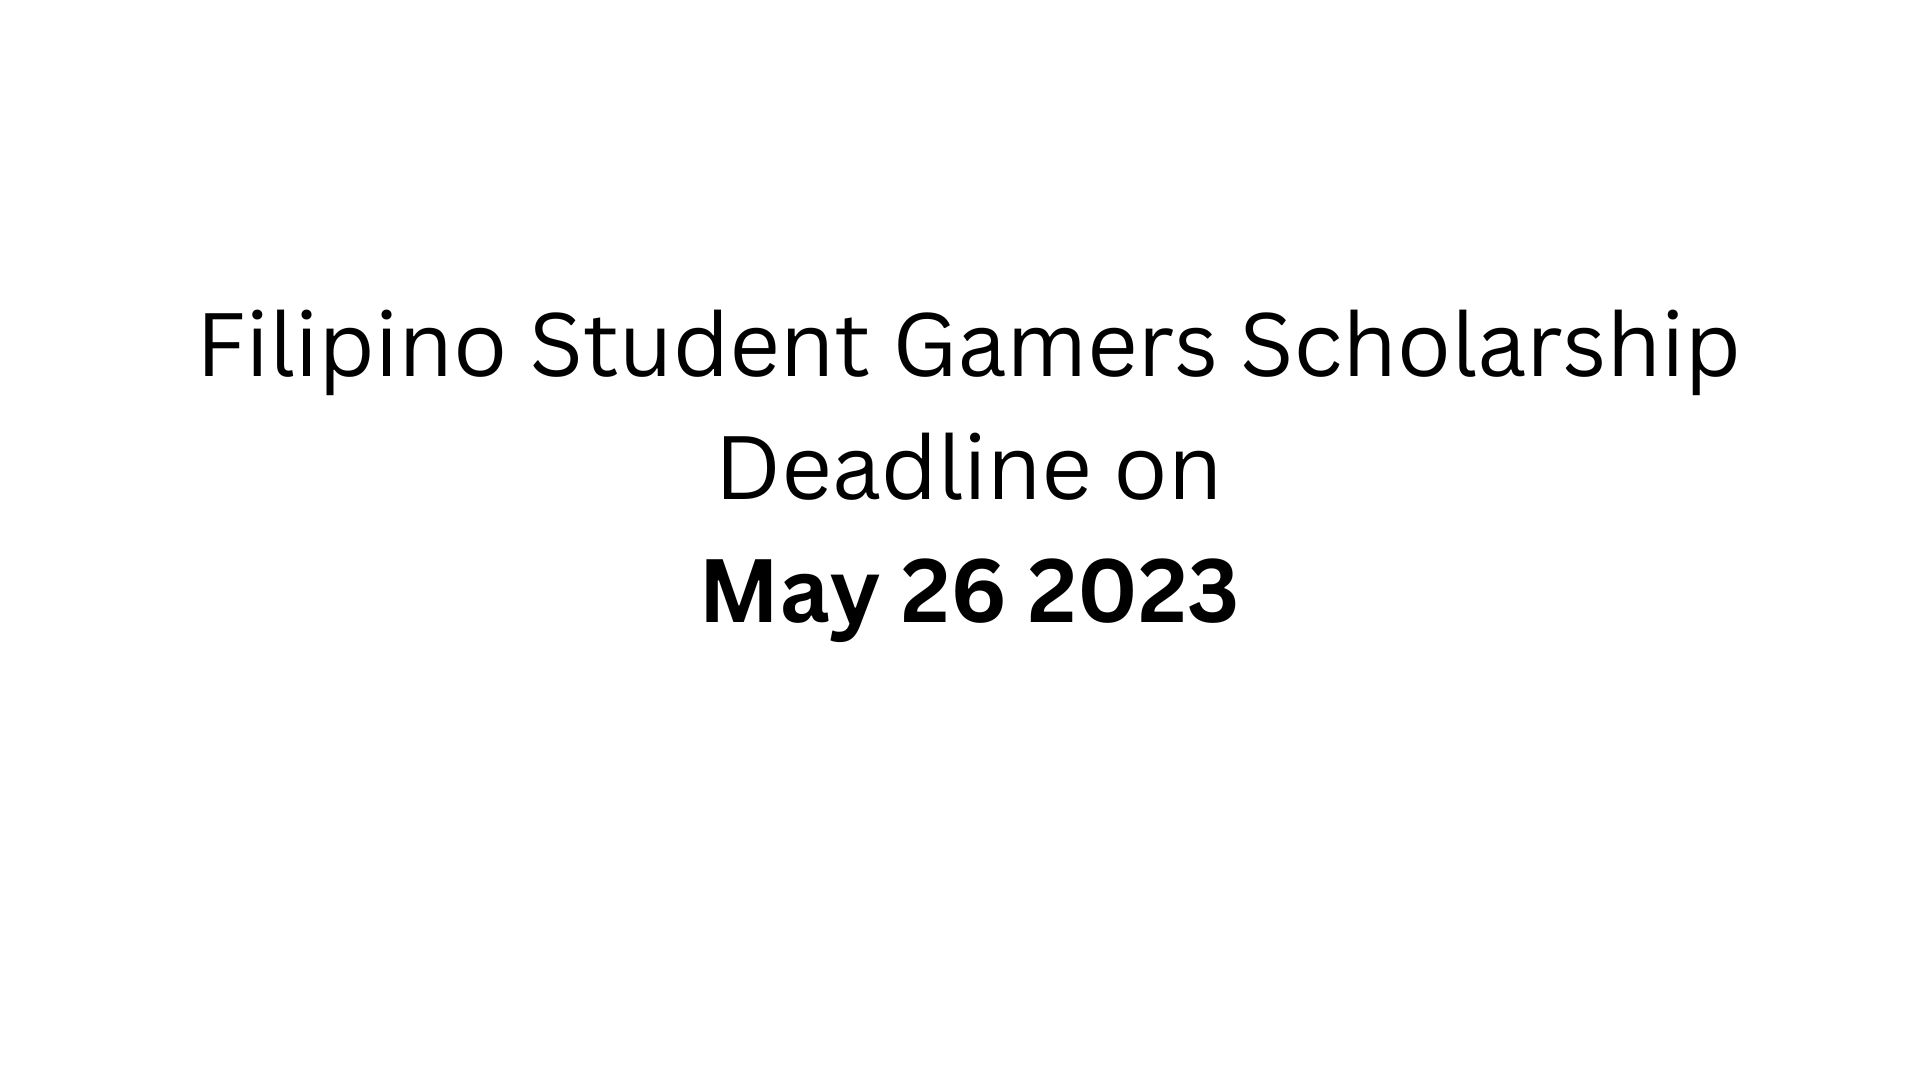 Philippine Student Gamers Scholarships